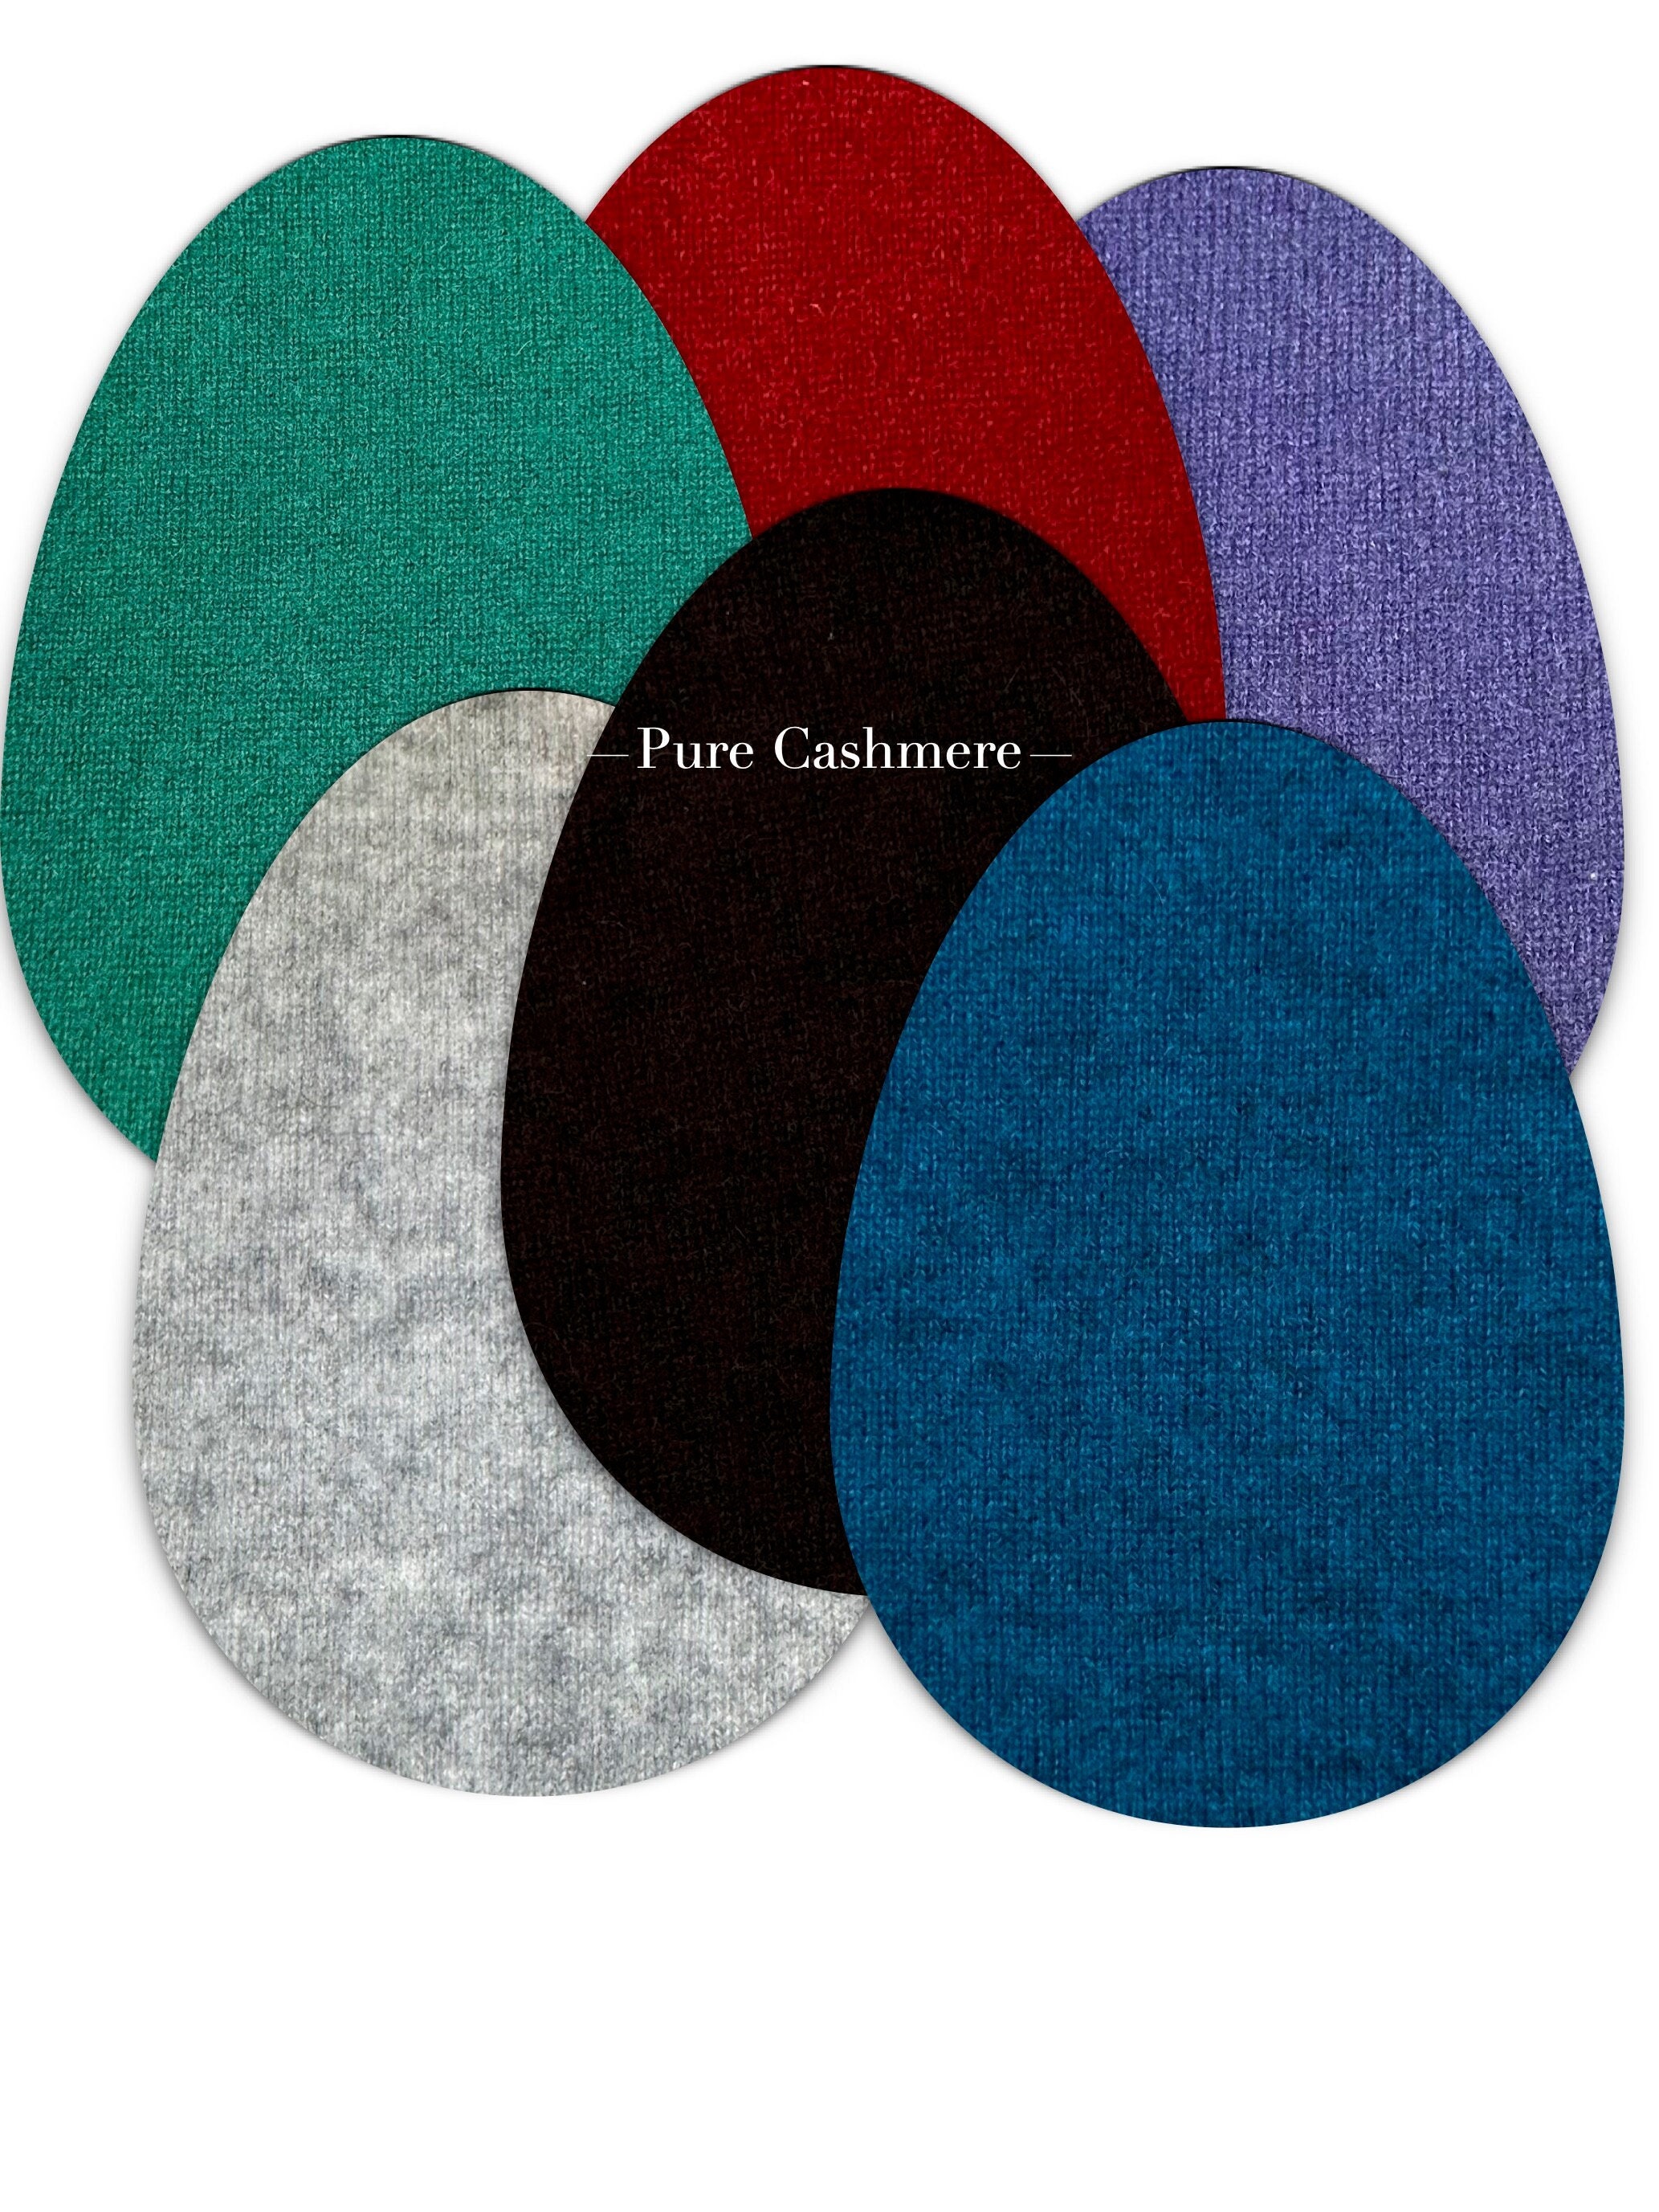 Beacon Fabri-tac Permanent Fabric Adhesive 4oz Crafts Leather Felt 